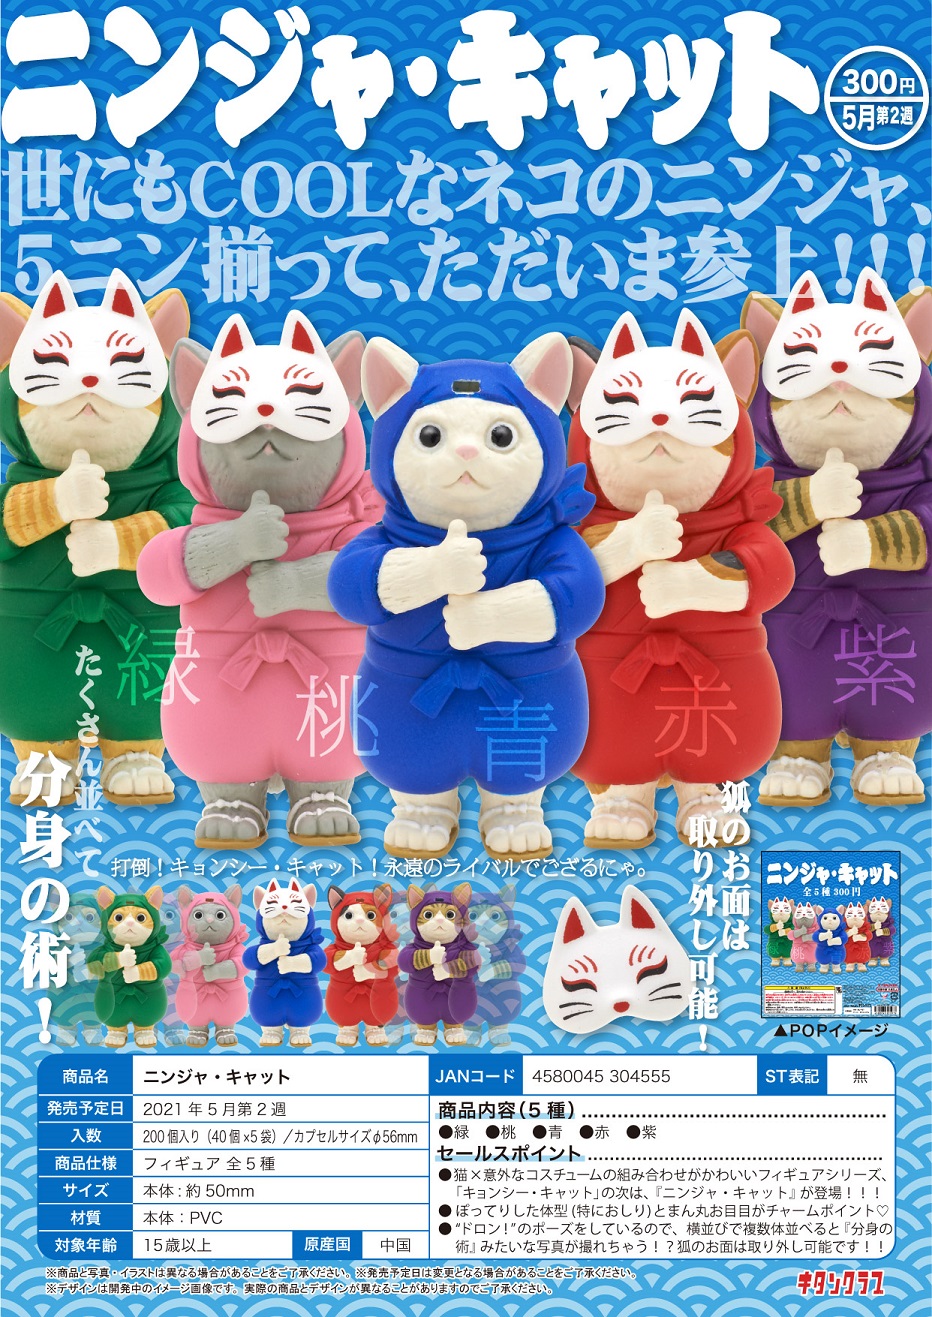 【B】300日元扭蛋 小手办 忍者猫猫 全5种 (1袋40个) 304555